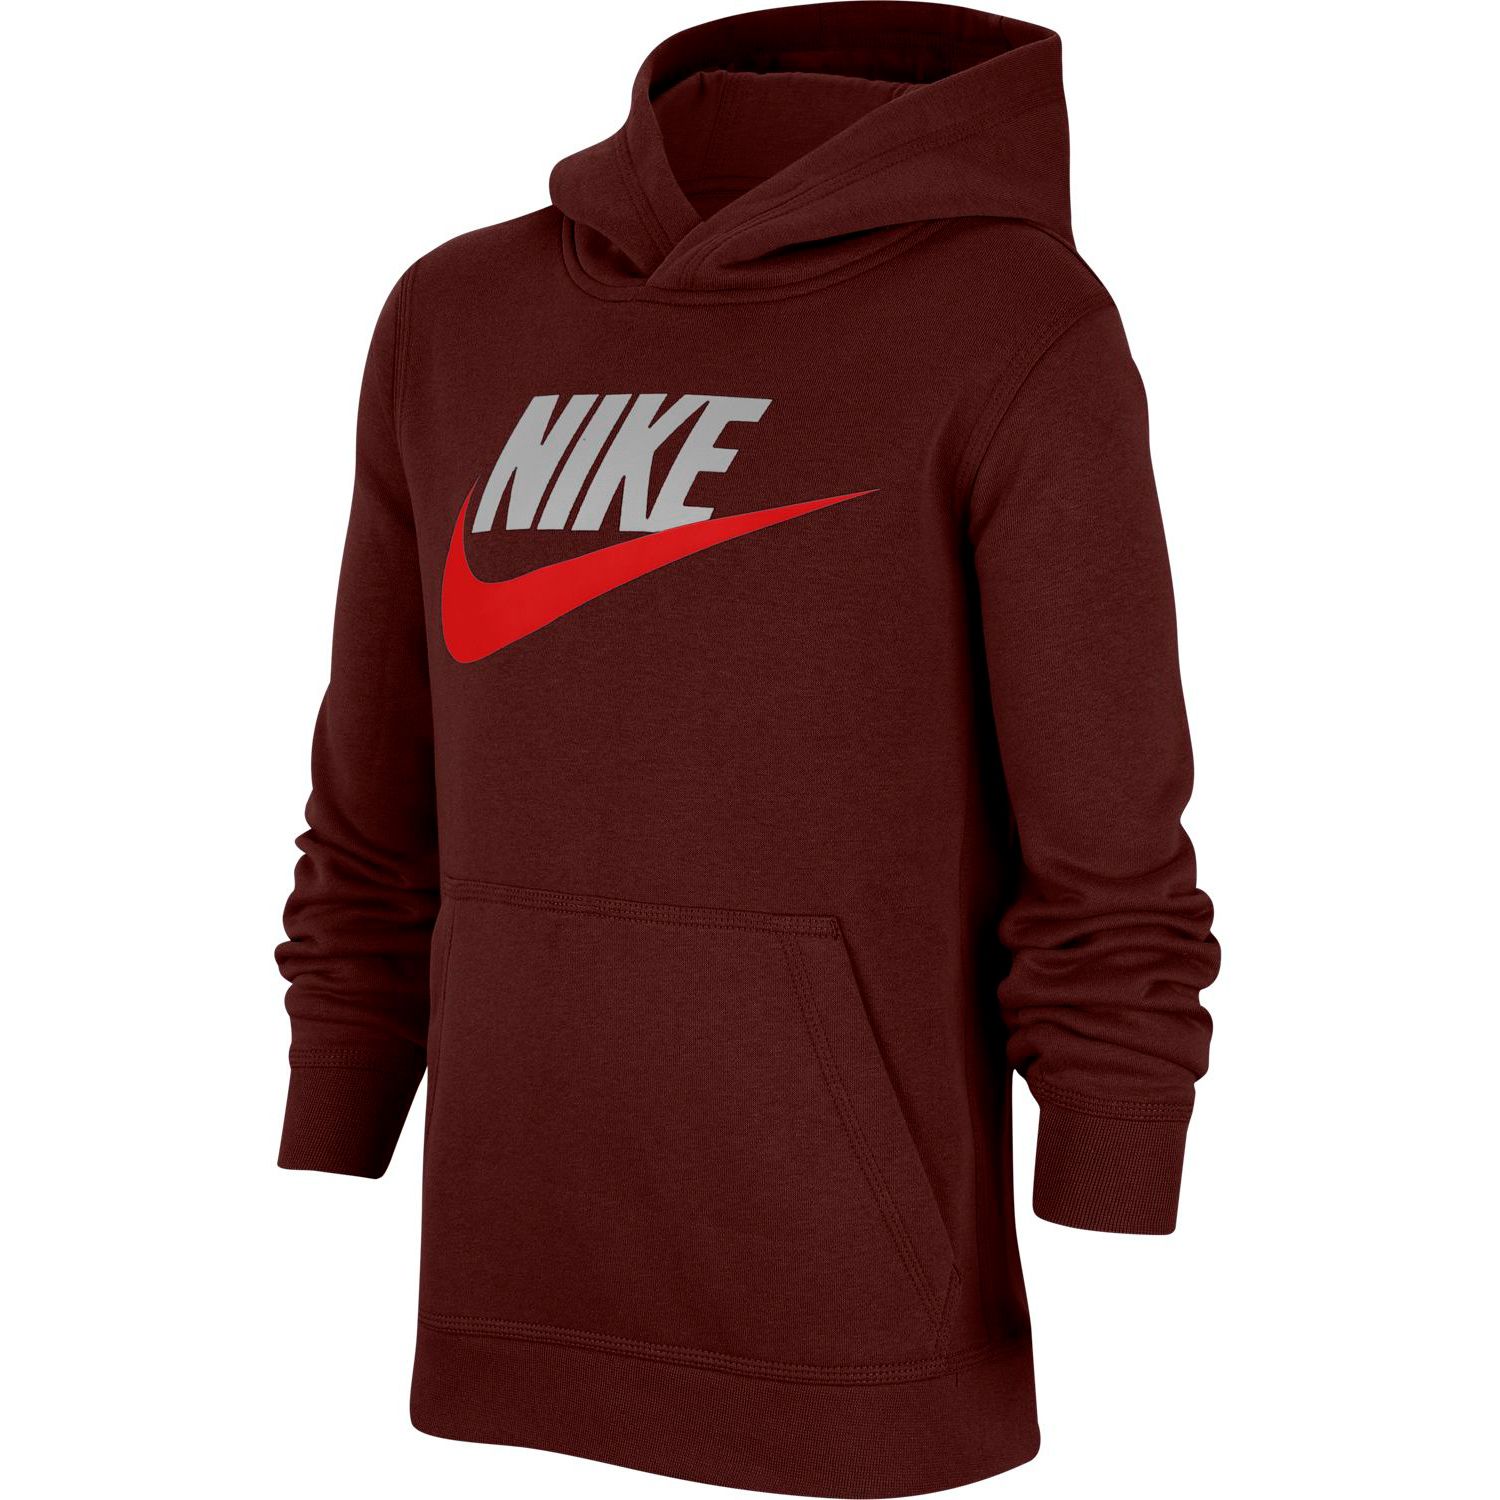 Boys Red Nike Hoodies \u0026 Sweatshirts 